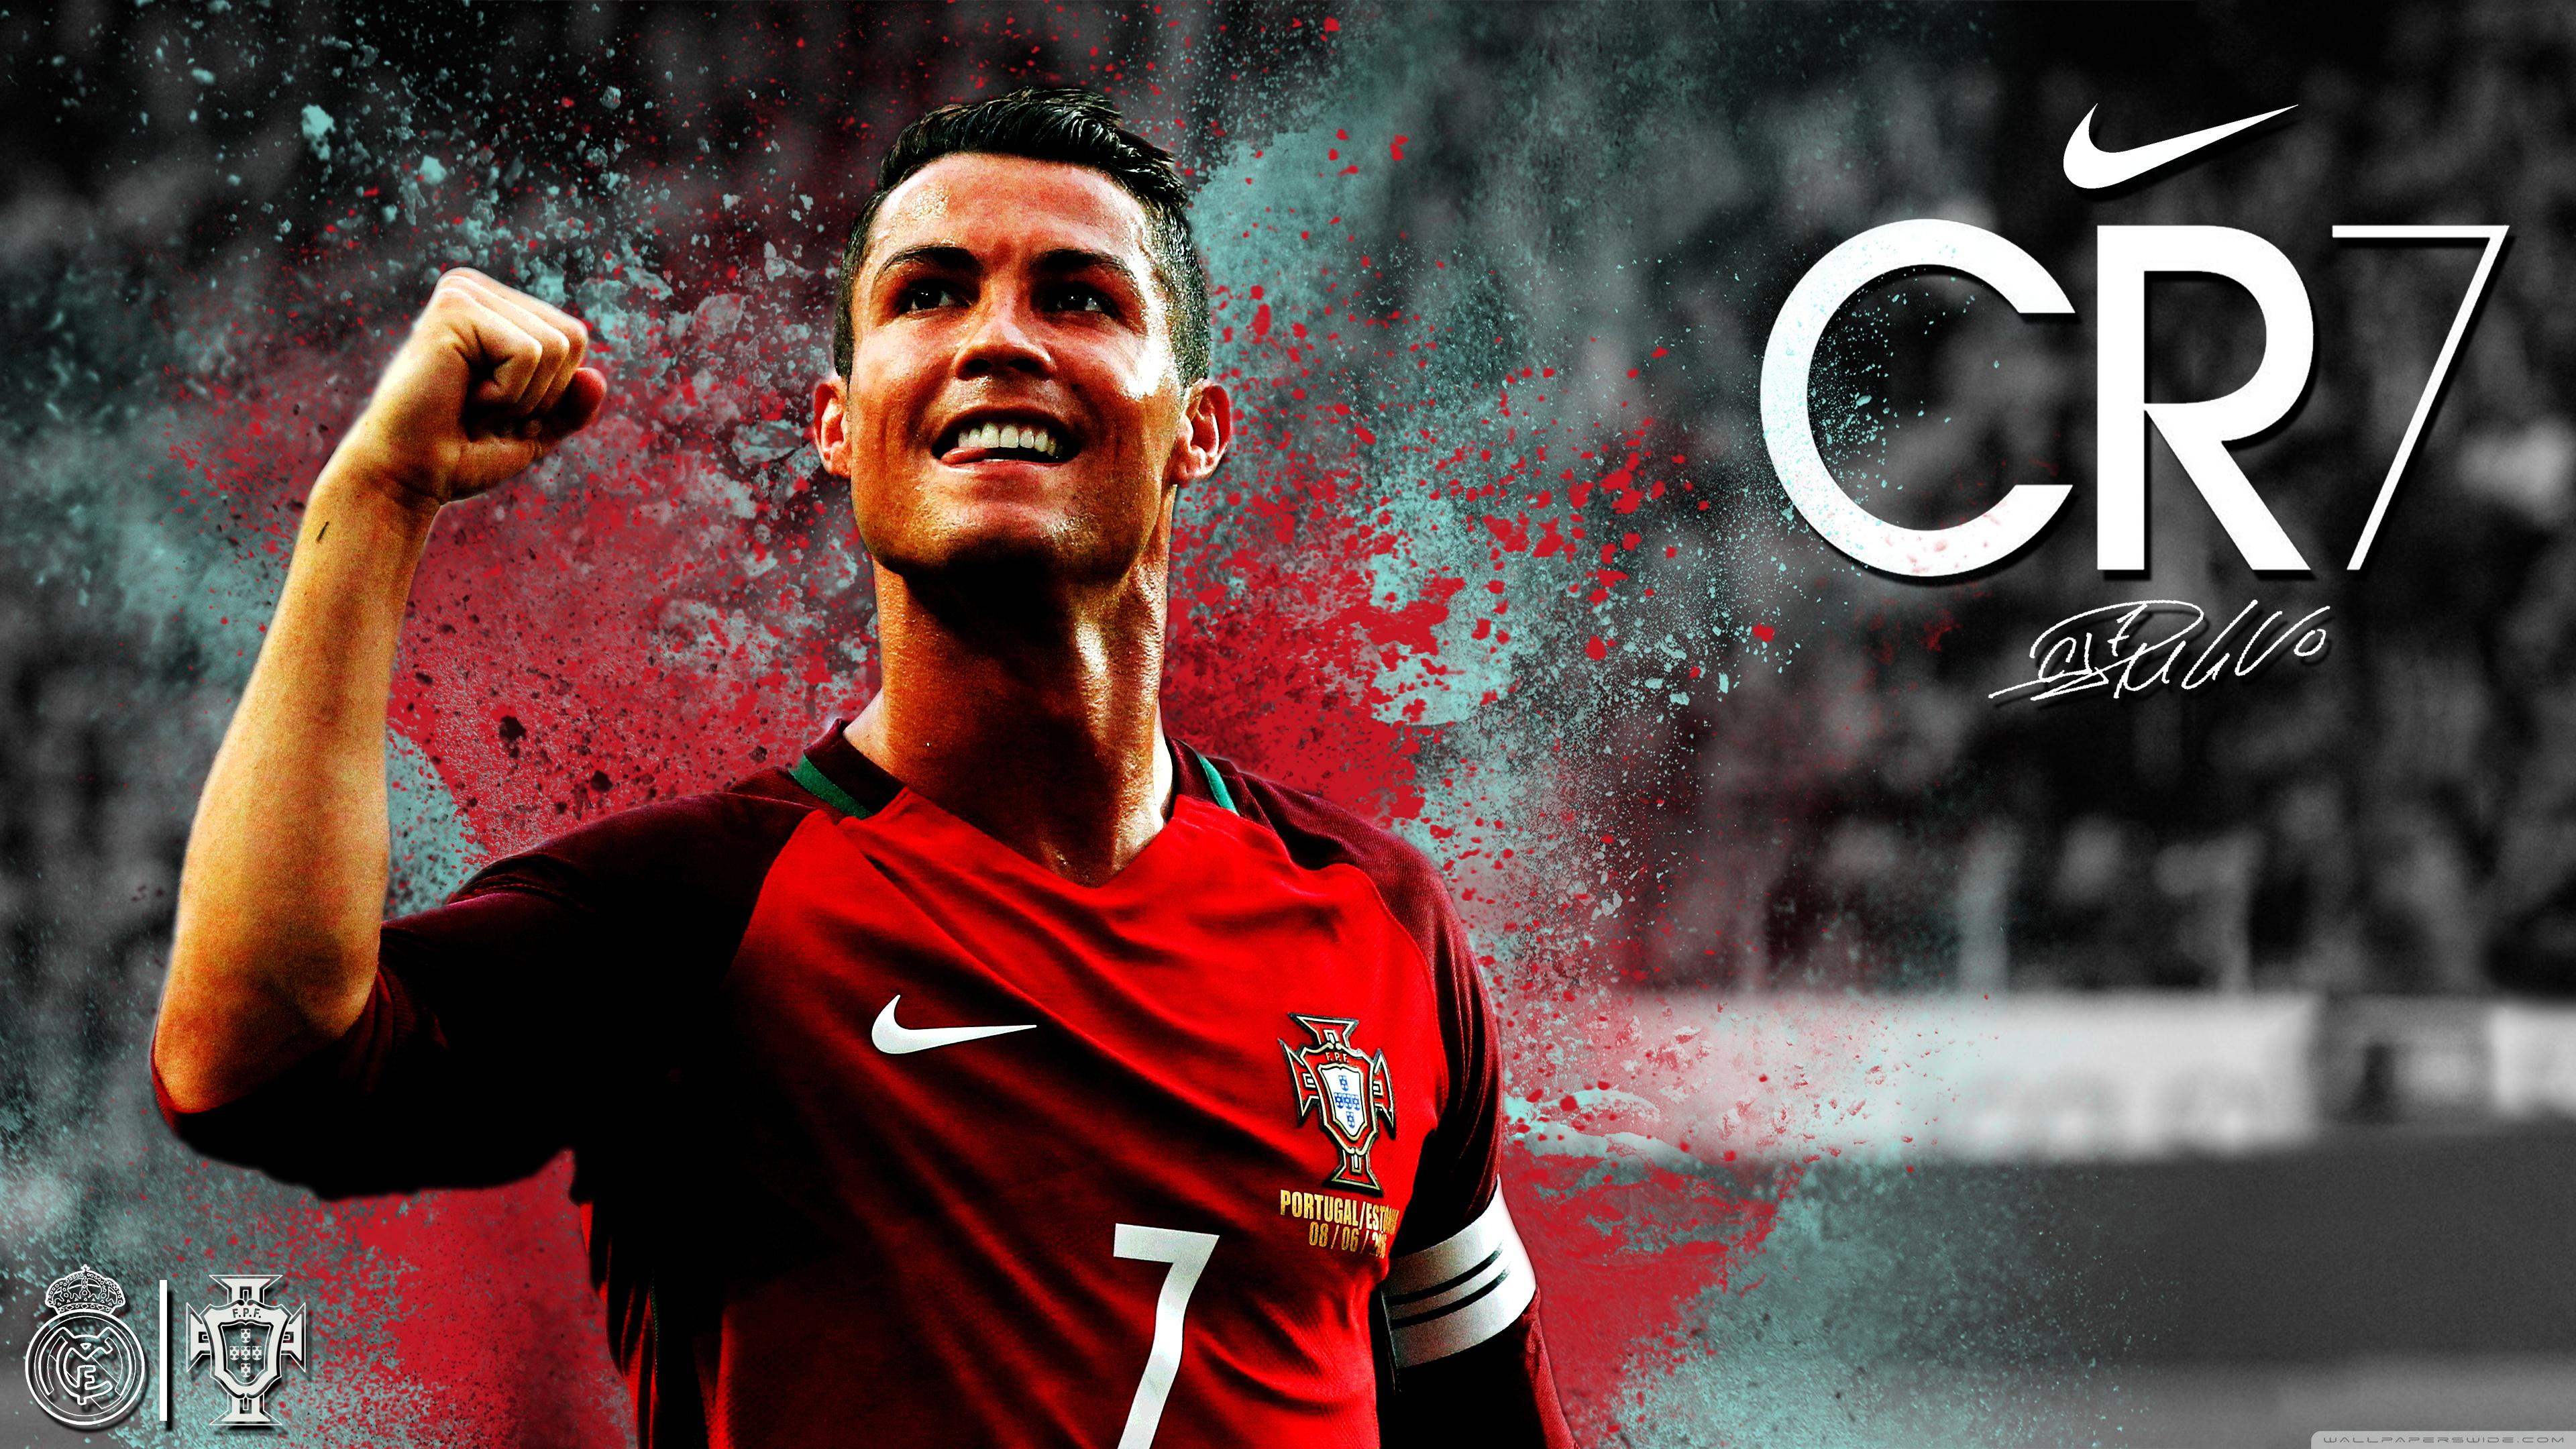 Ronaldo Poster Wallpapers - Wallpaper Cave